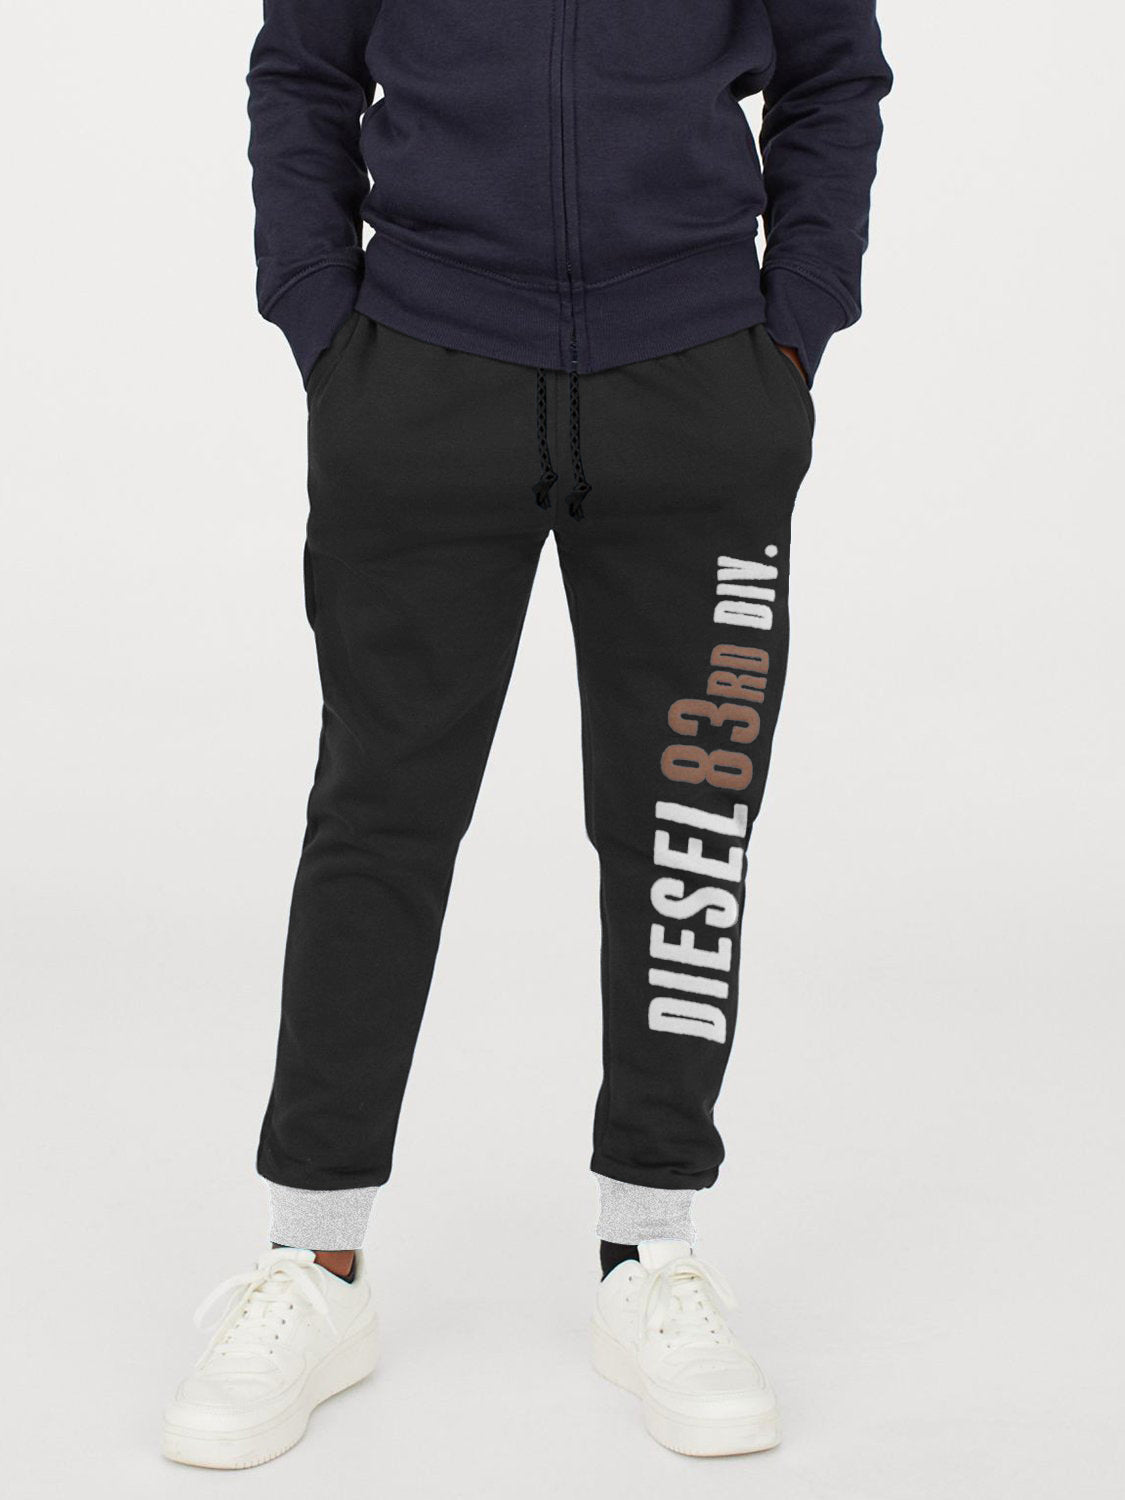 Diesel Terry Fleece Slim Fit Jogger Trouser For Kids-Black & Grey-SP885/Rt2169